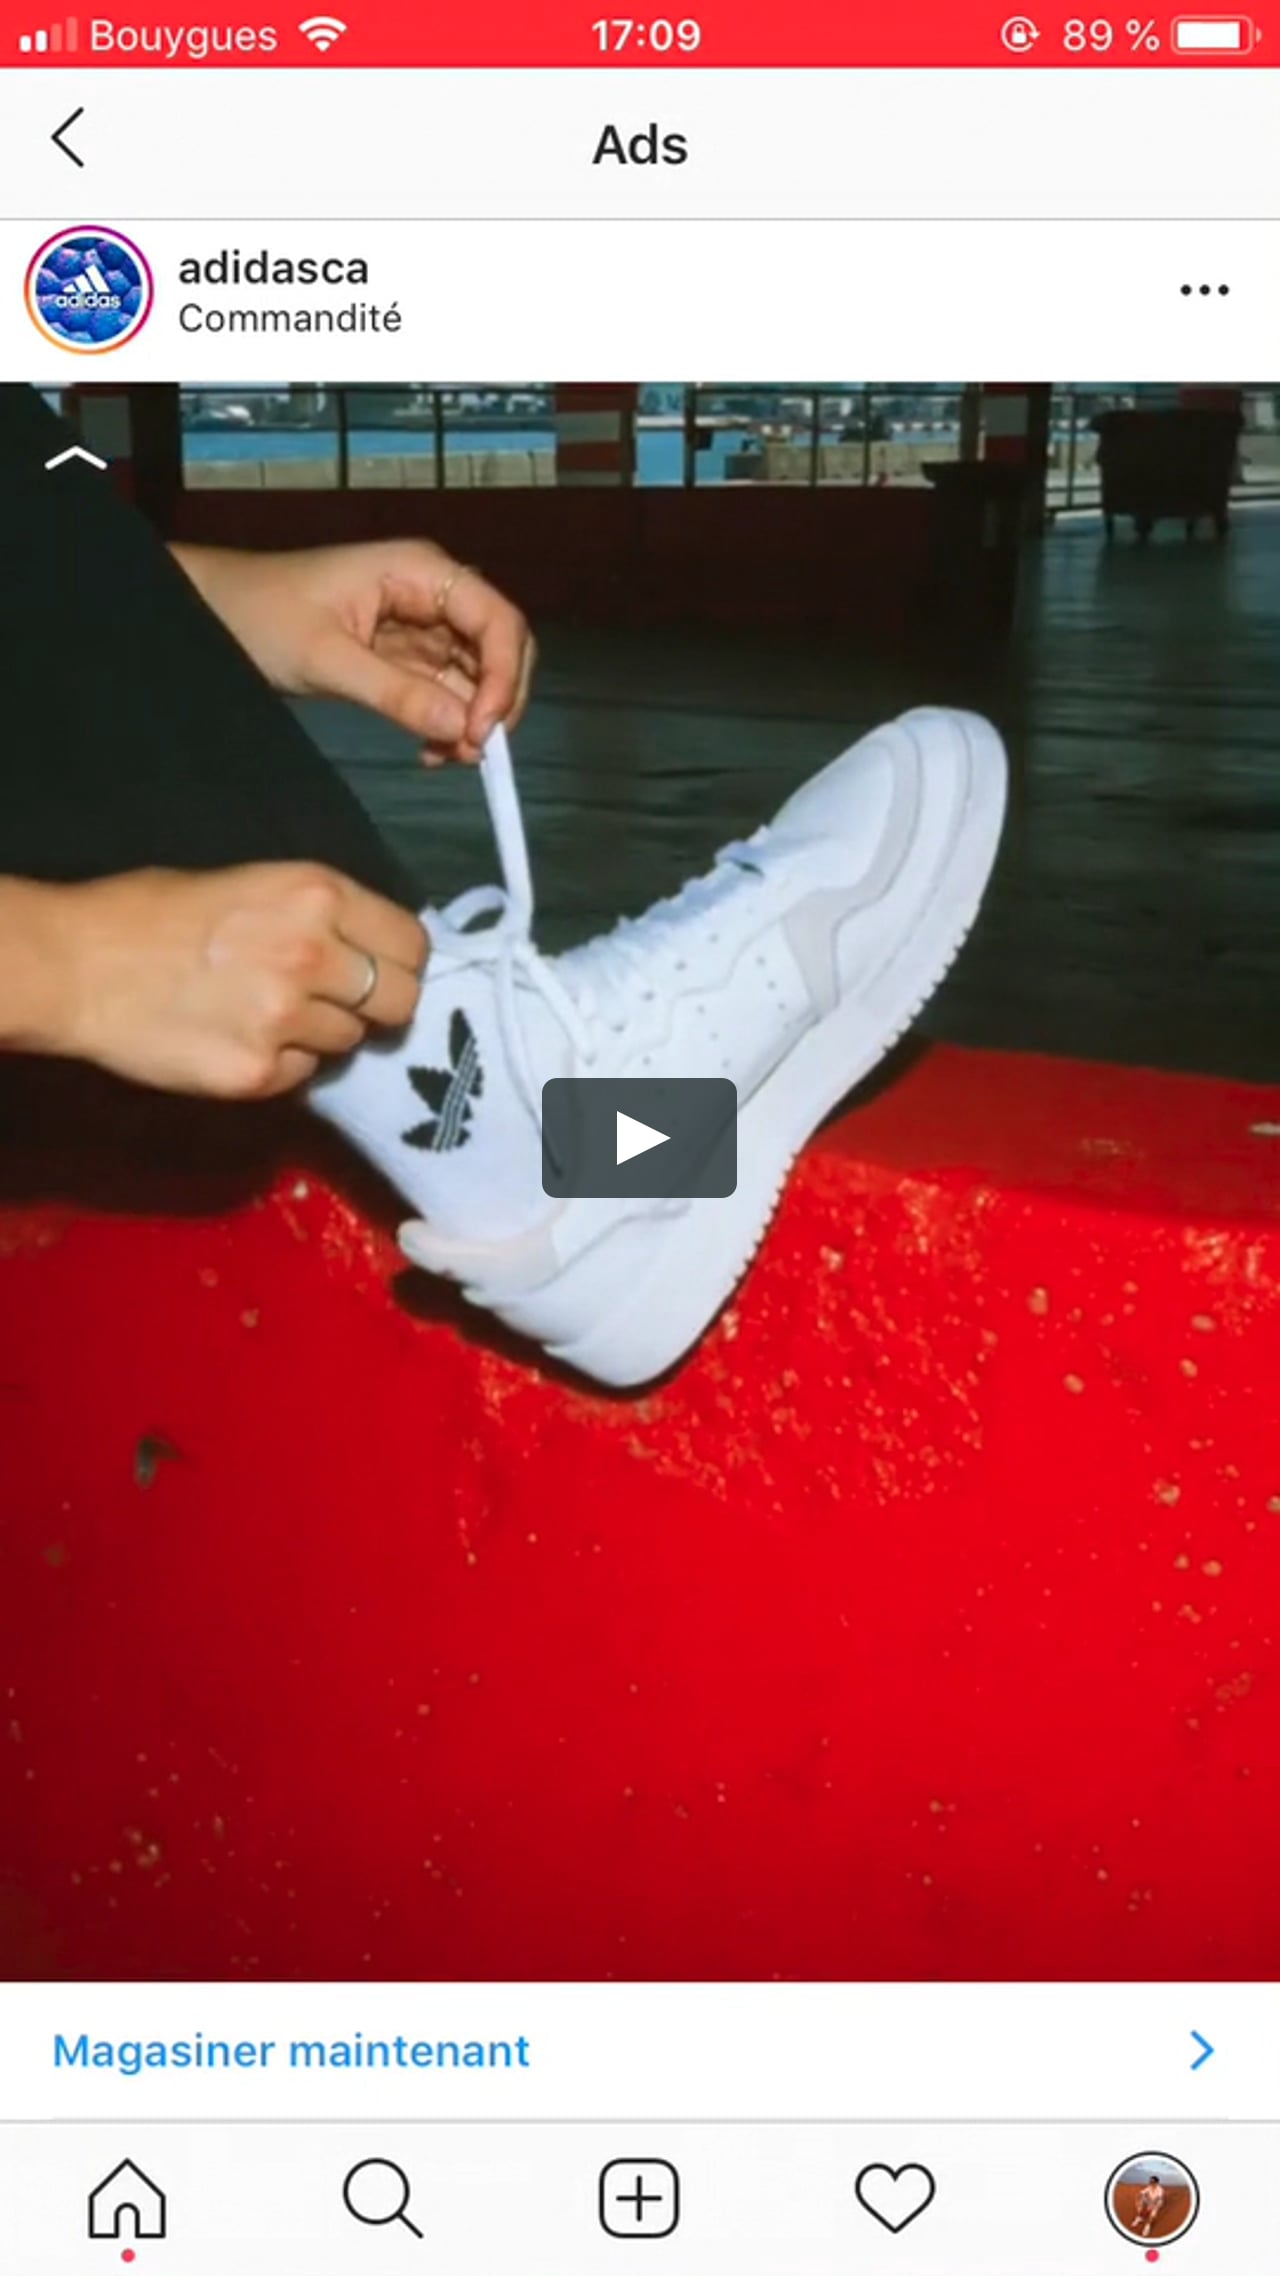 Adidas - Instagram on Vimeo